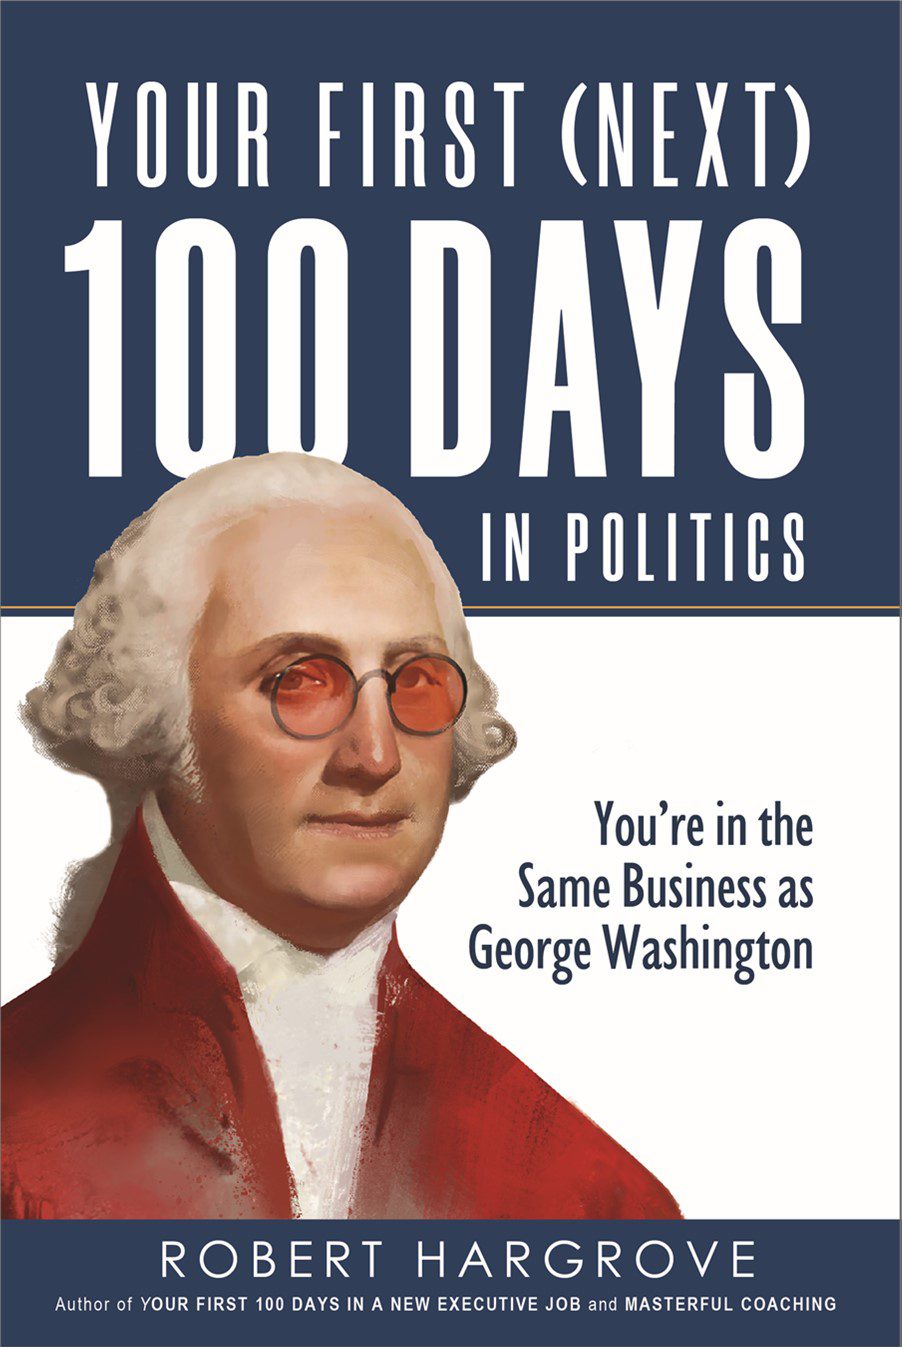 Your First (Next) 100 Days in Politics